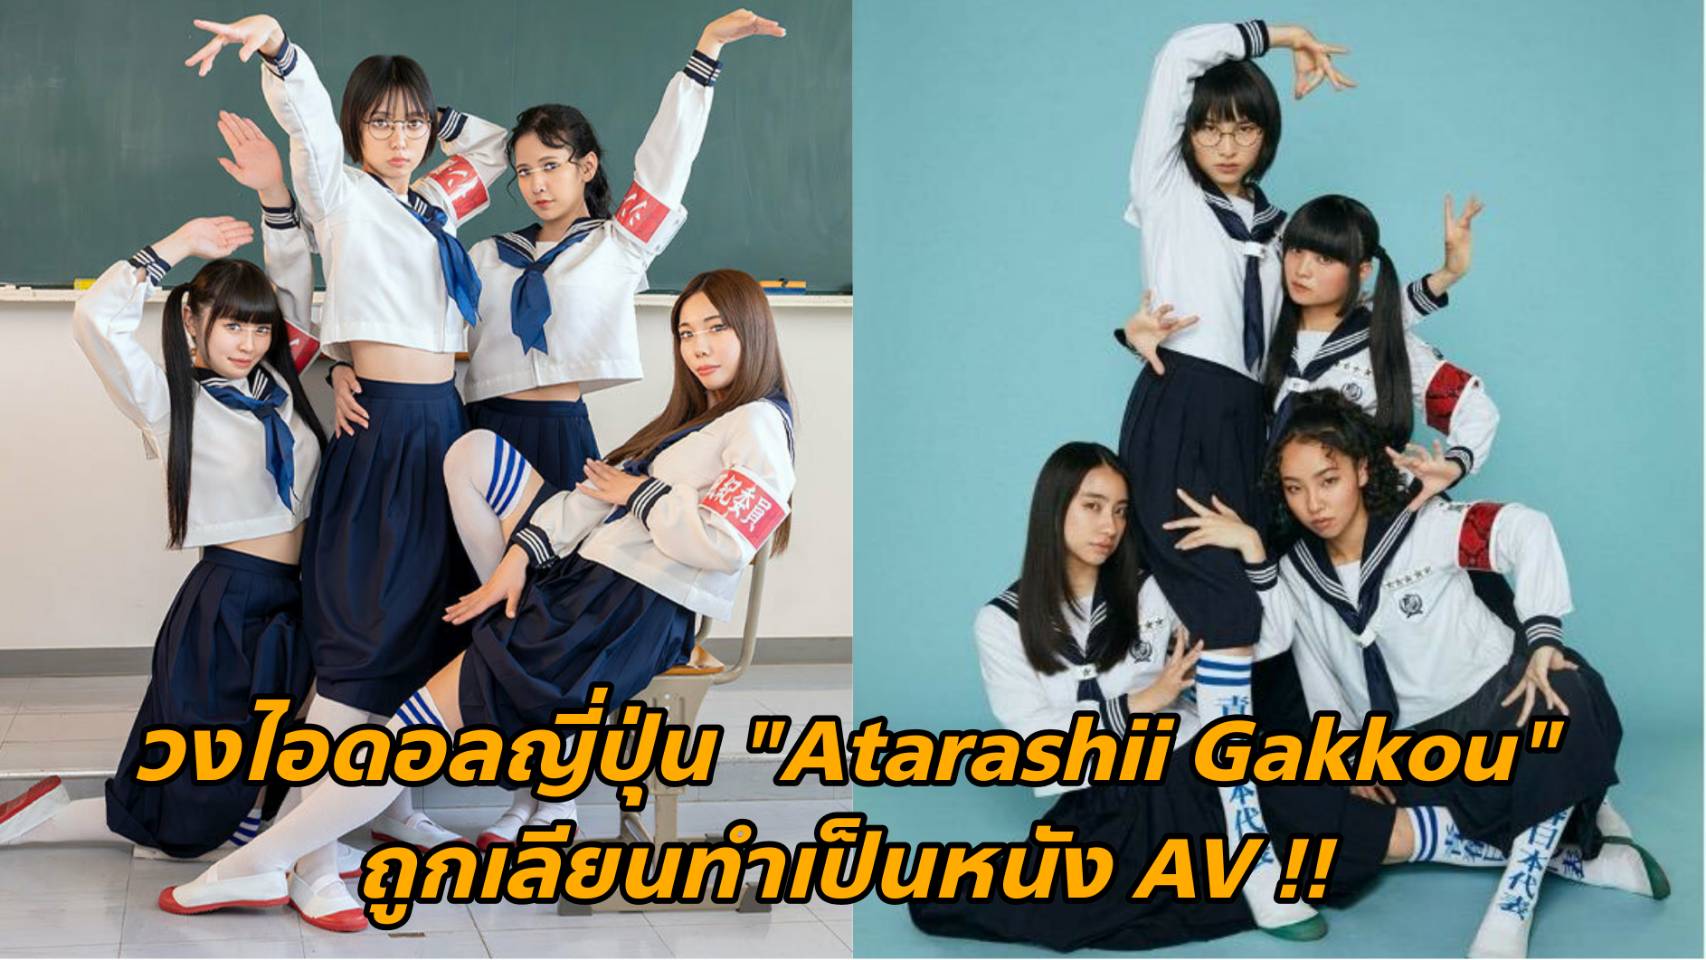 [HUNTC-006] วงไอดอลญี่ปุ่น "Atarashii Gakkou" ถูกเลียนทำเป็นหนัง AV 12